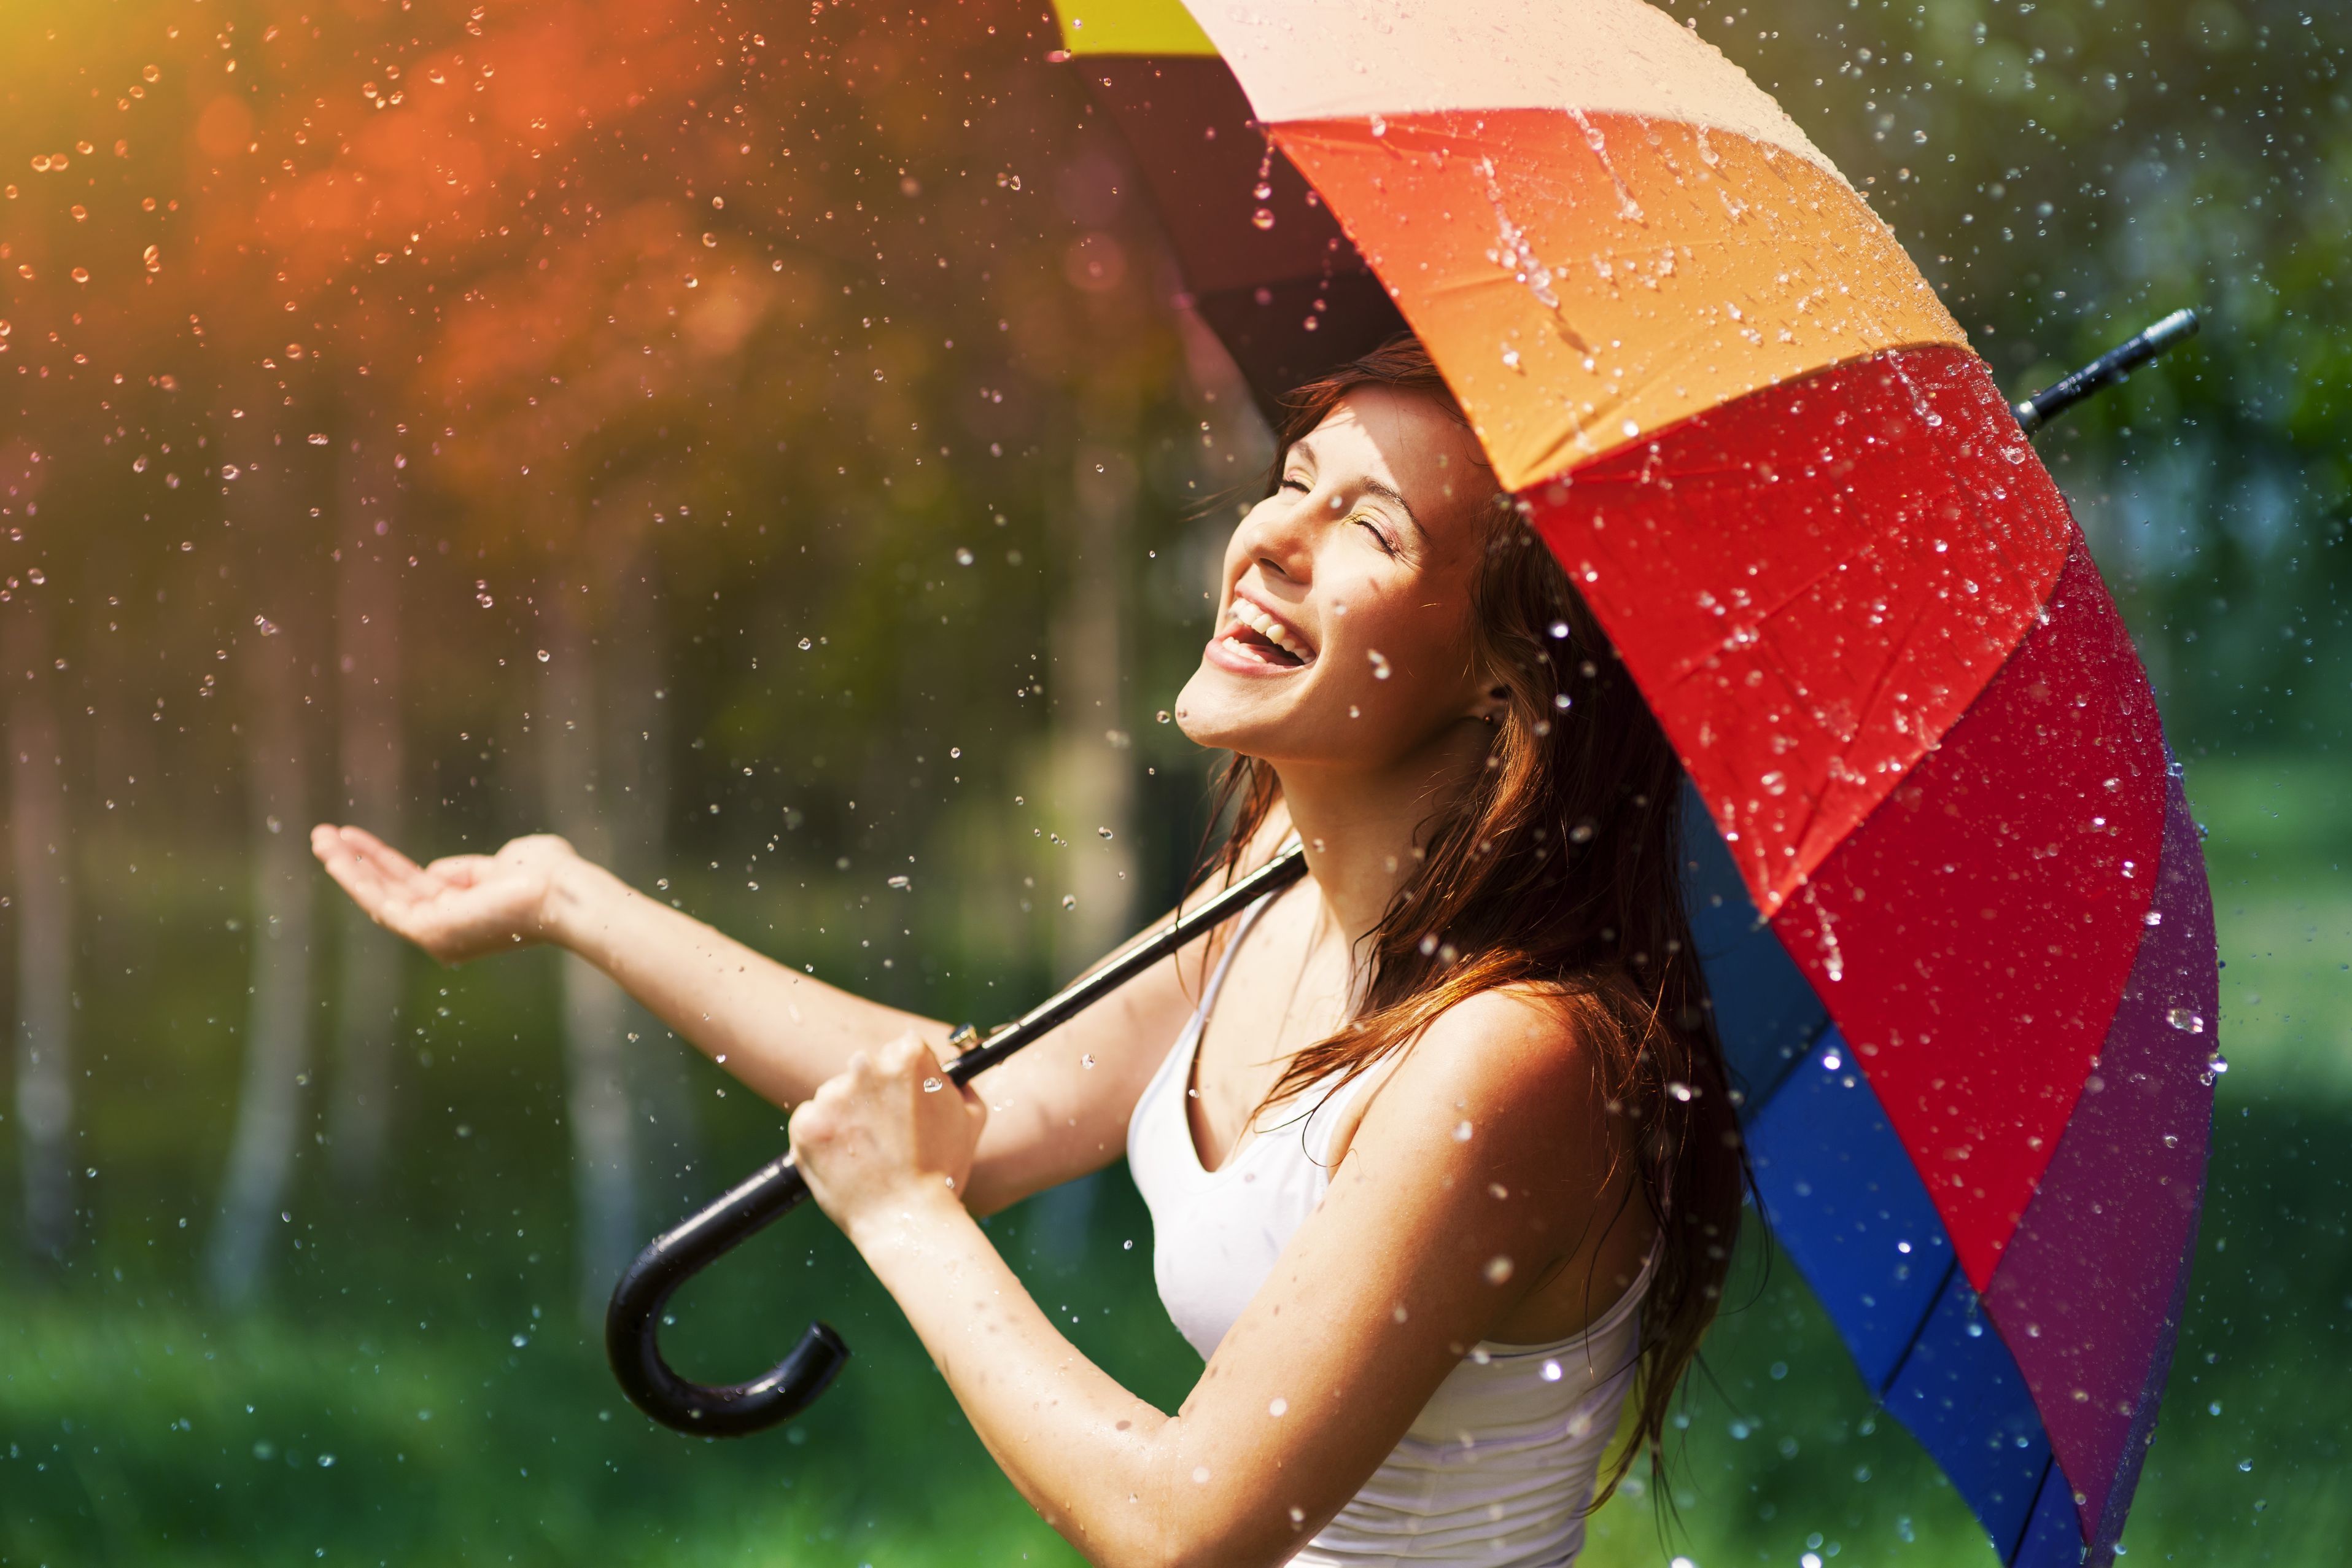 mood-girl-brunette-smile-joy-positive-happy-fun-umbrella-umbrella-color-rain -rain-drops-summer-sun-background-wallpaper -widescreen-fullscreen-widescreen-HD-wallpapers - CÔNG TY TNHH SẢN XUẤT &  ĐẦU TƯ RỒNG VÀNG